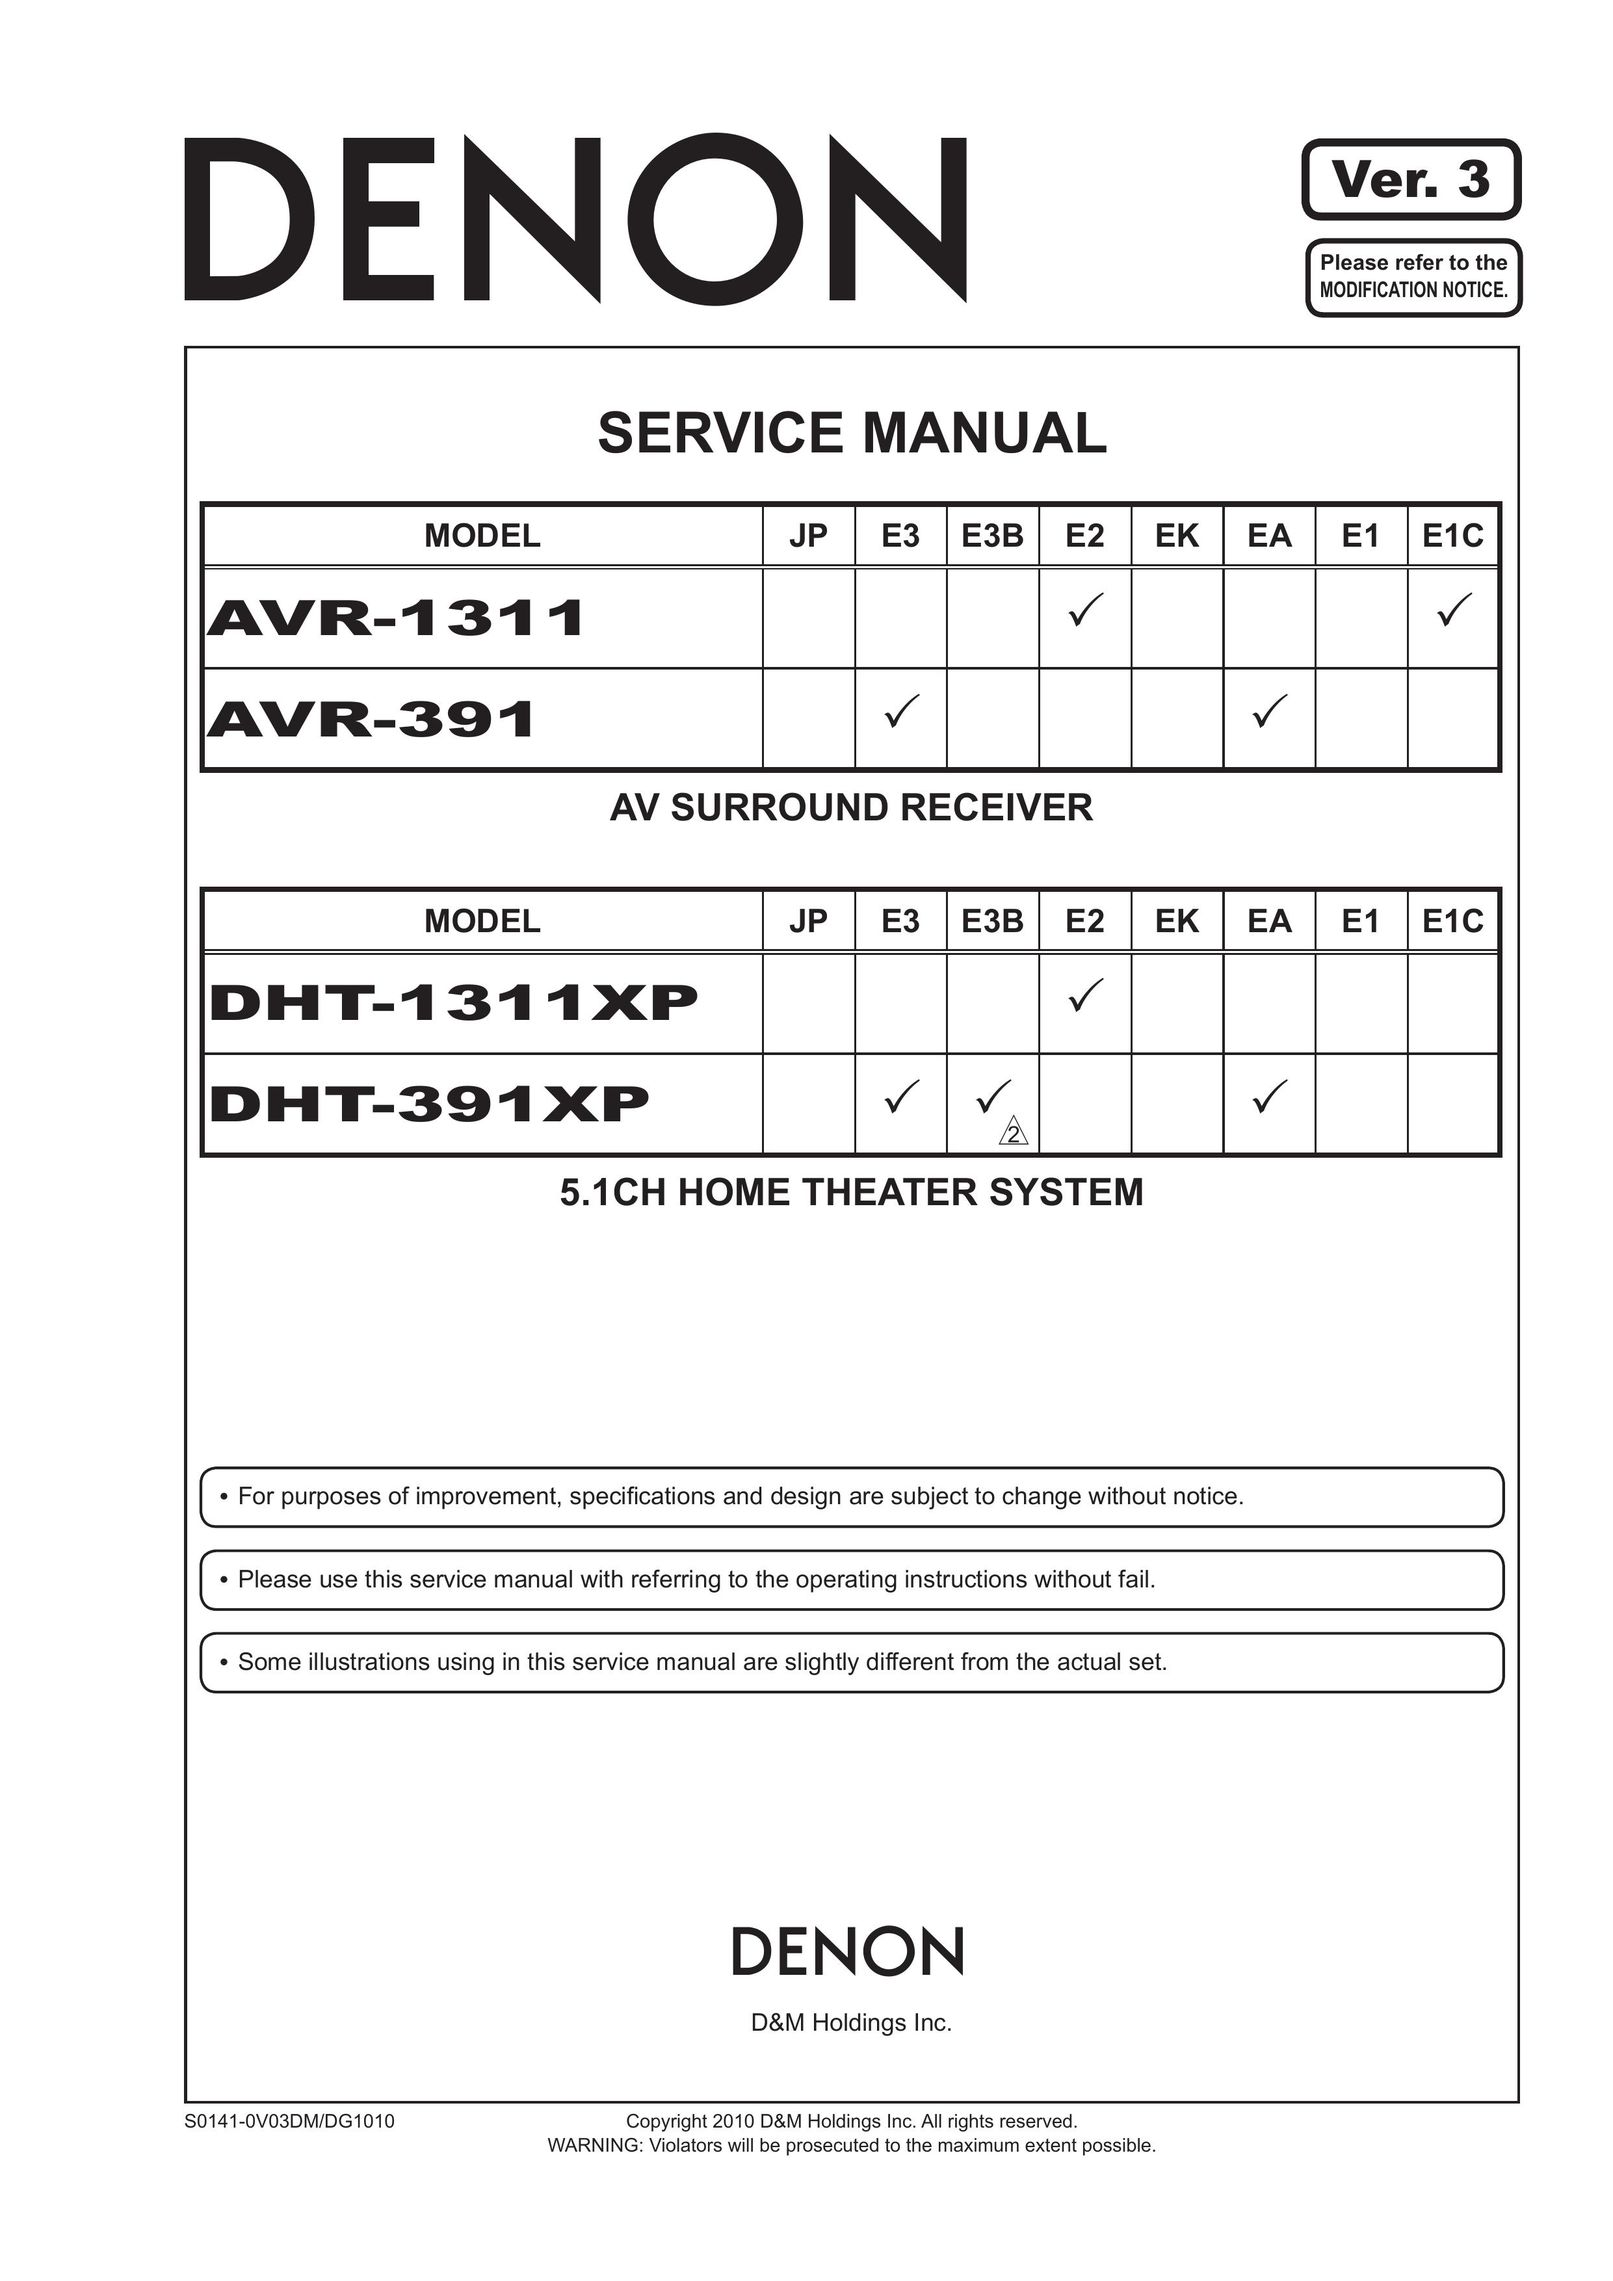 Denon AVR-1311 DVD Player User Manual